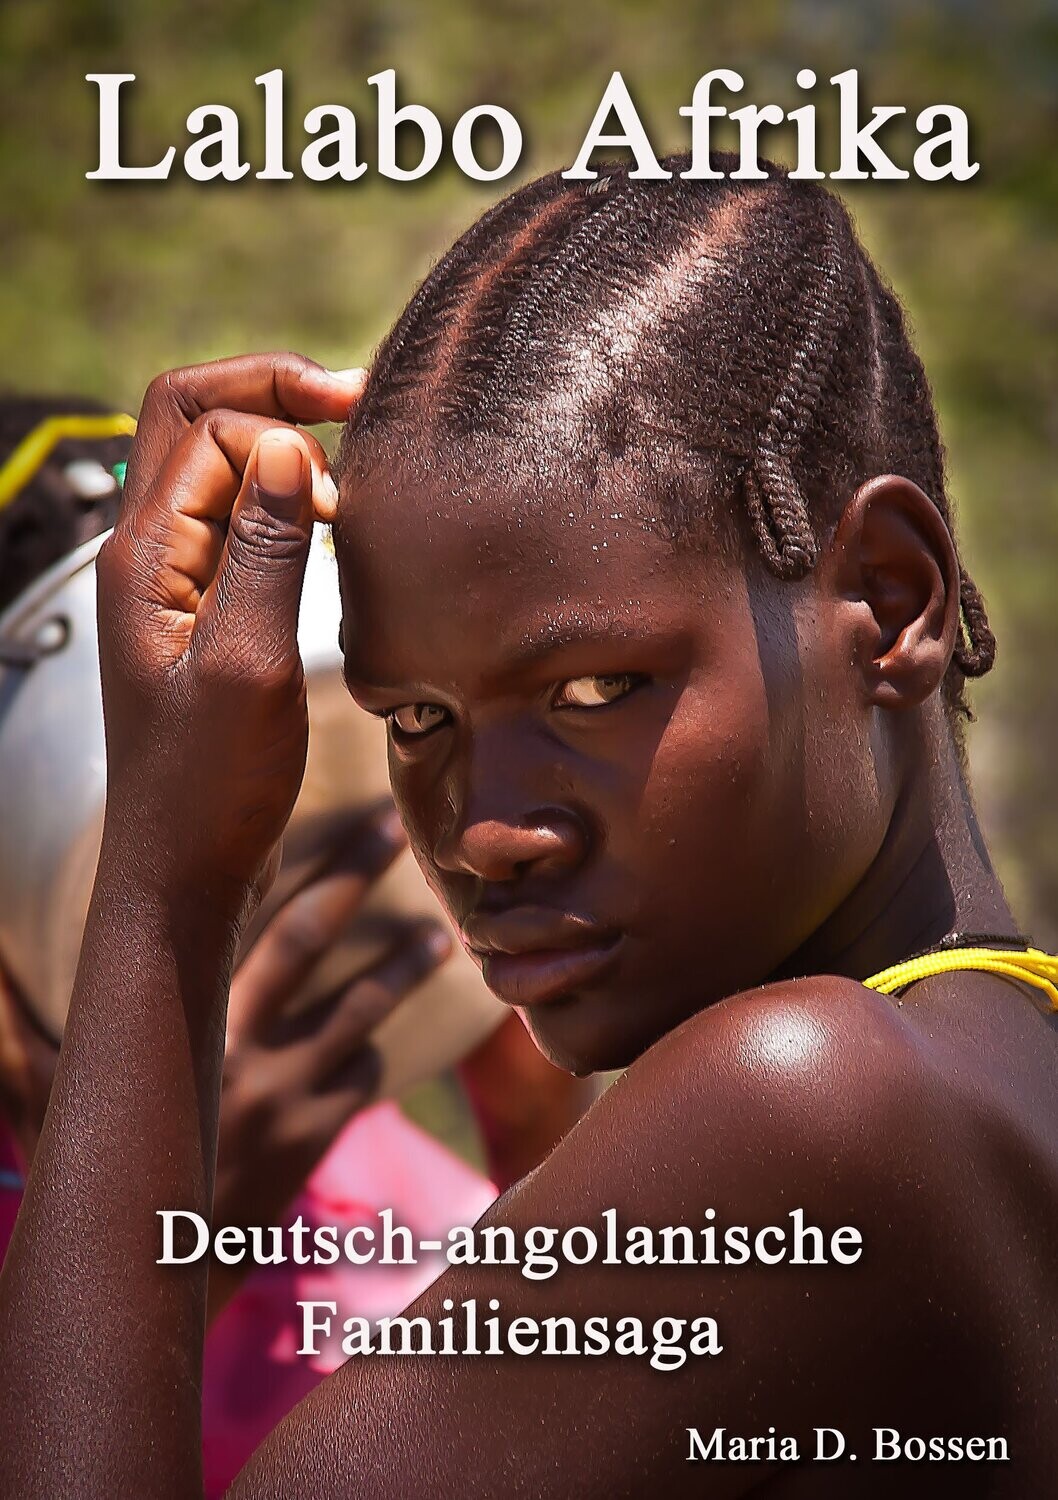 Lalabo Afrika:
Deutsch-angolanische Familiensaga